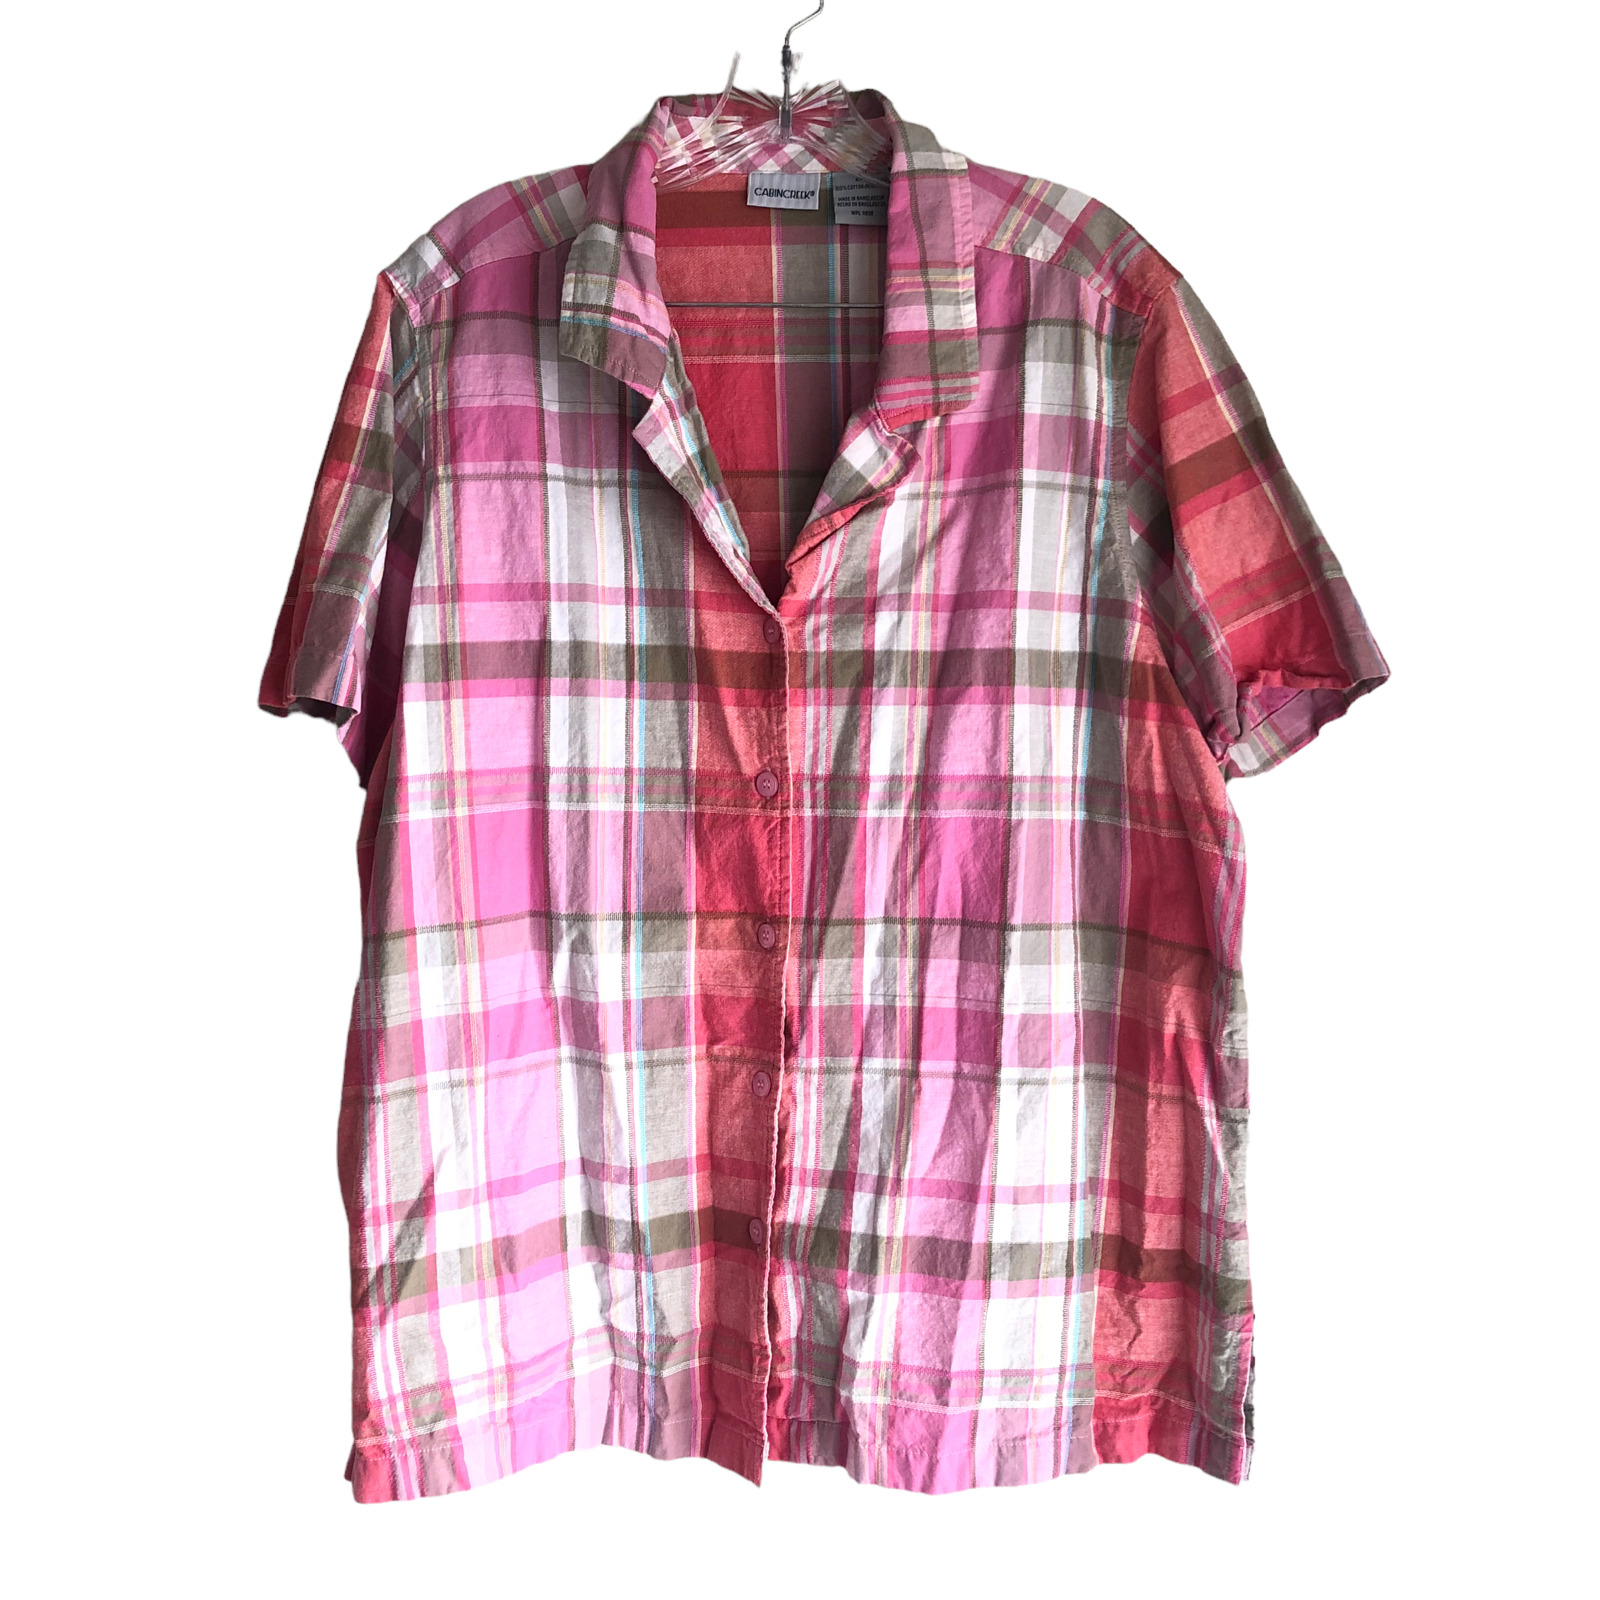 Cabin Creek Women\'s Shirt Plus Size 2X Plaid Pink 100% Cotton Short Sleeve